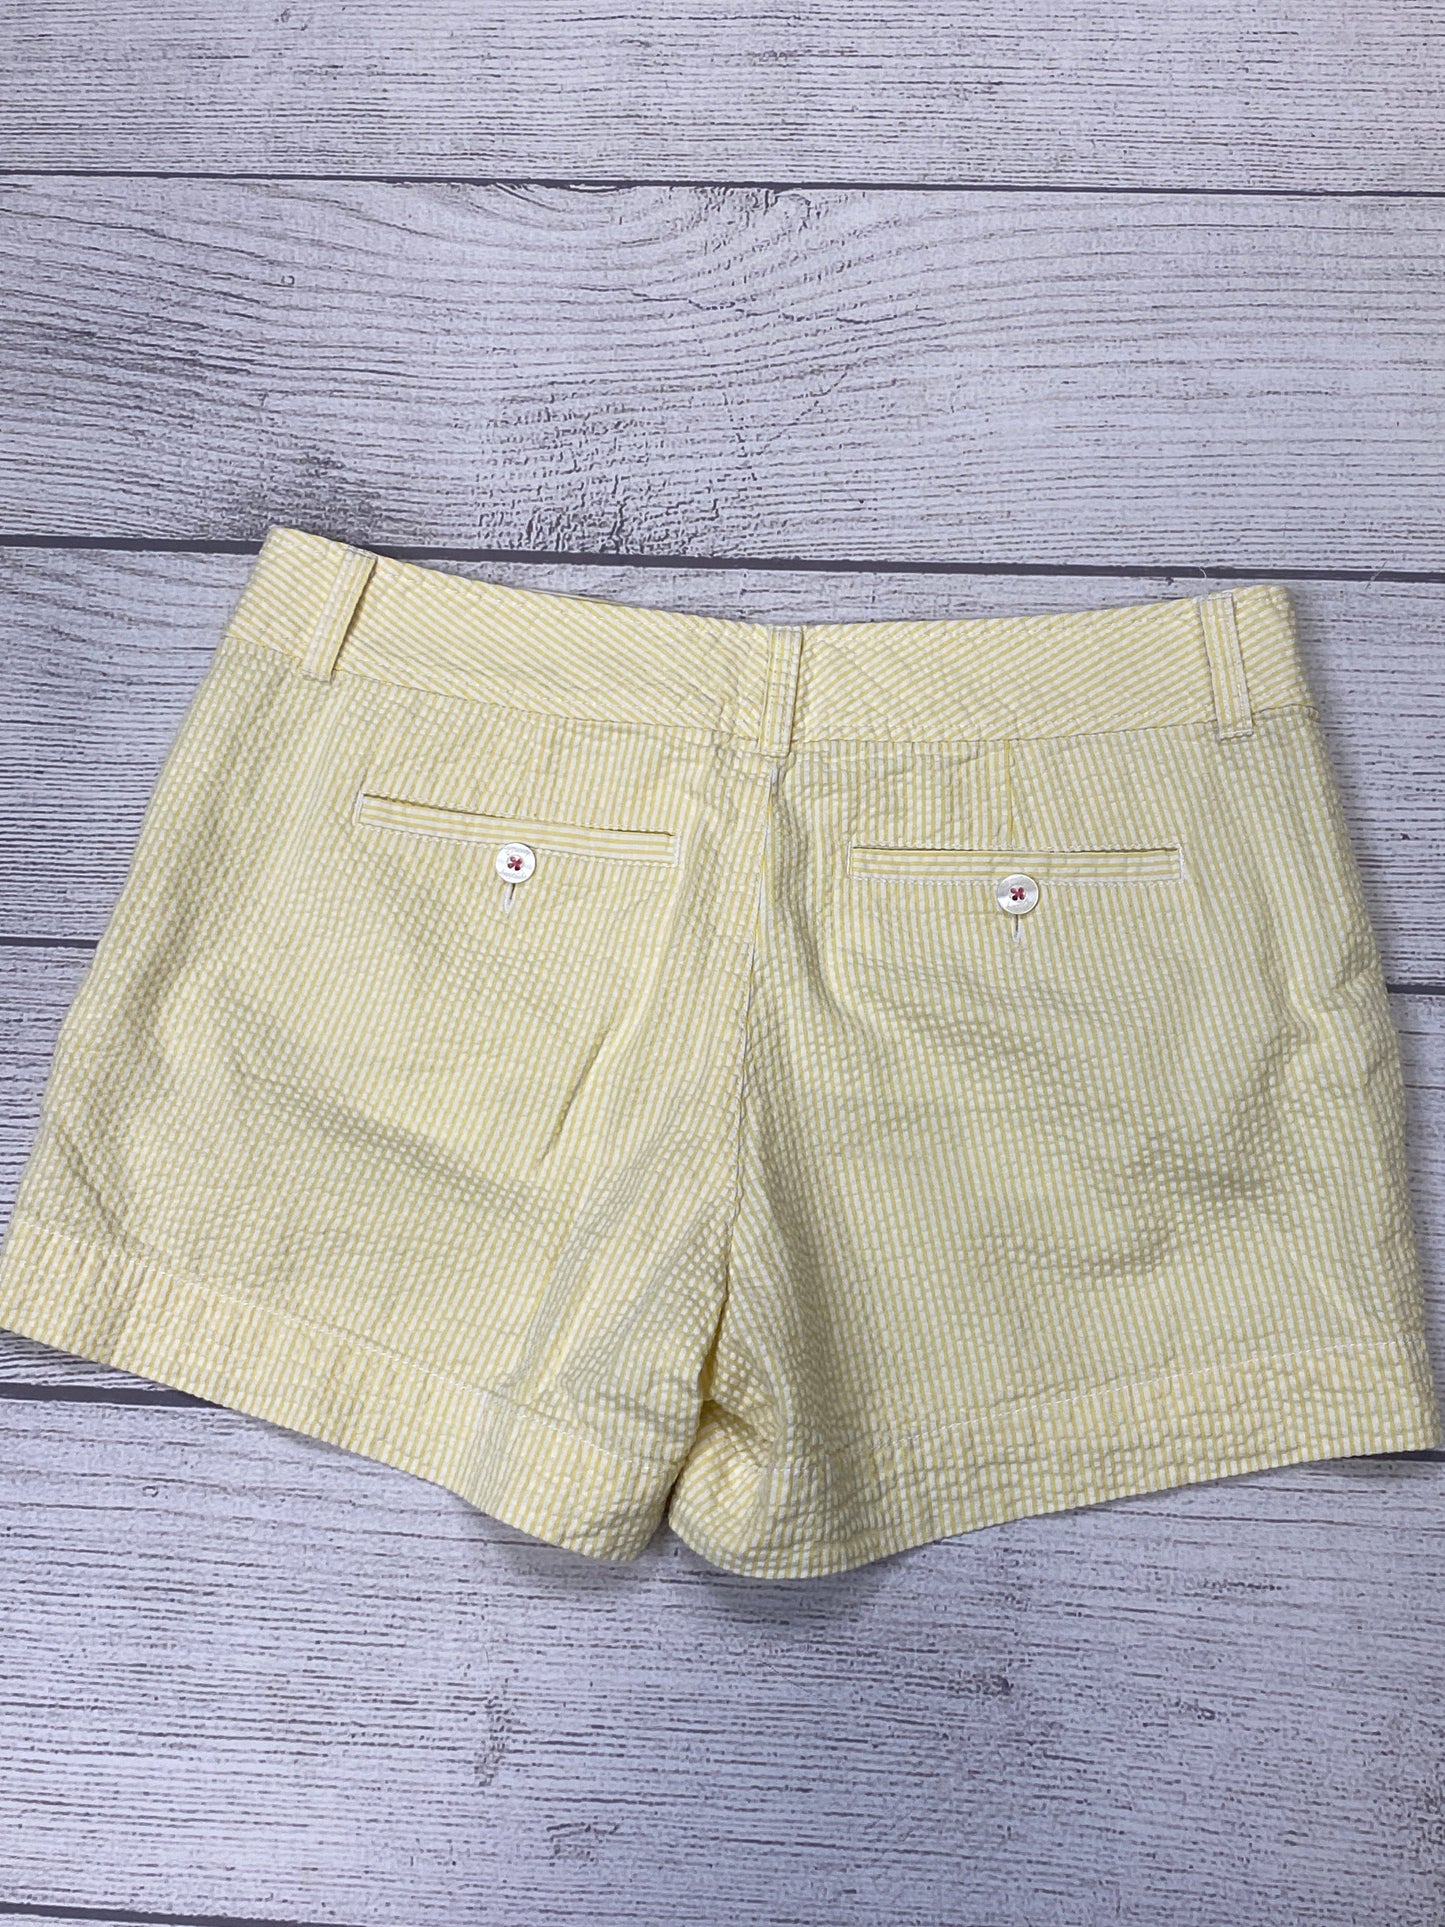 Yellow Shorts Lilly Pulitzer, Size 6